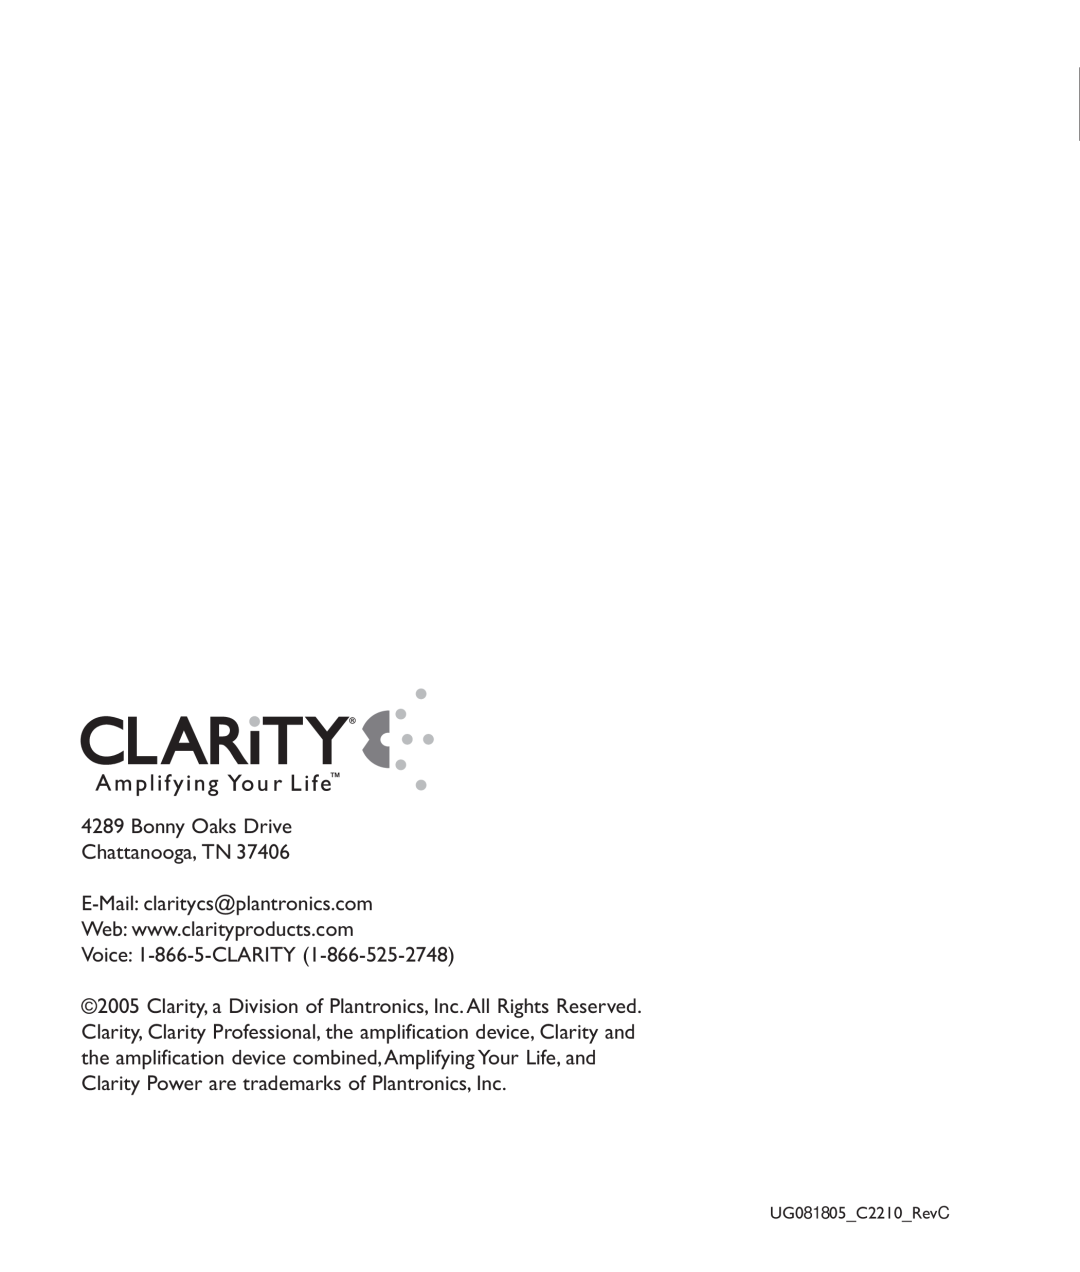 Clarity c2210 manual Bonny Oaks Drive Chattanooga, TN, E-Mail claritycs@plantronics.com, Voice 1-866-5-CLARITY 